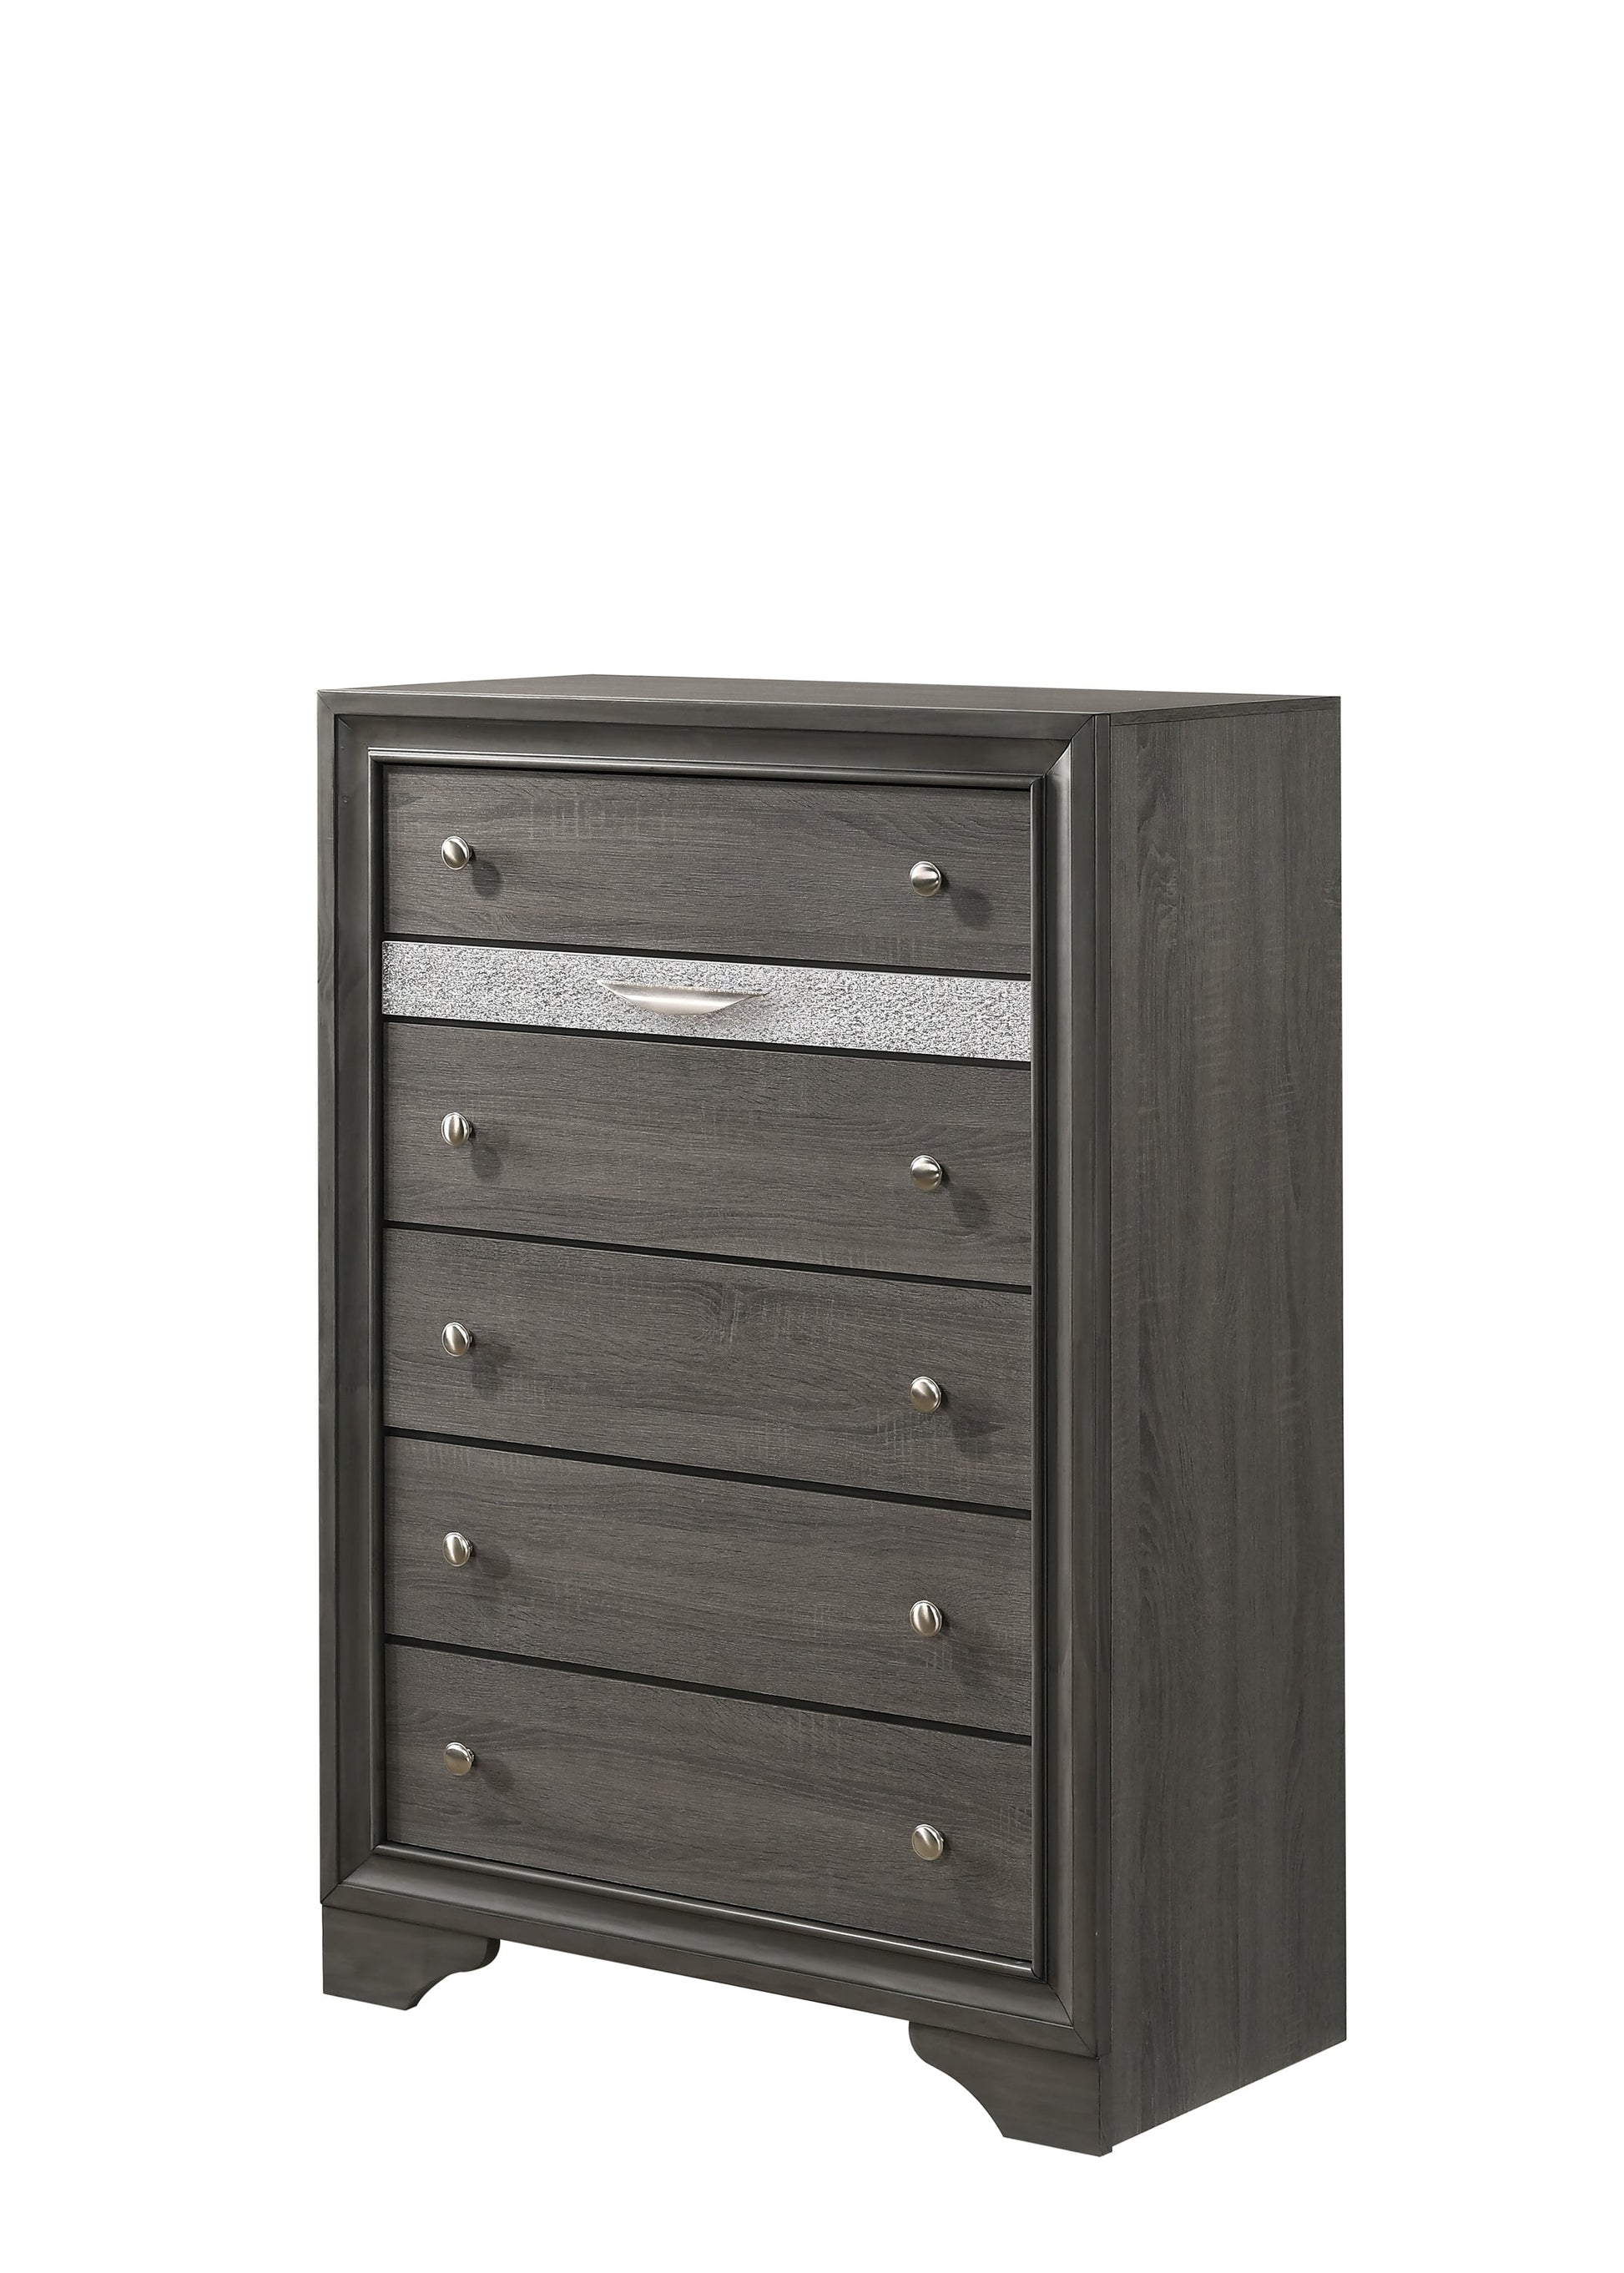 Regata Gray/Silver Sleek And Modern, Wood Storage Platform Bedroom Set